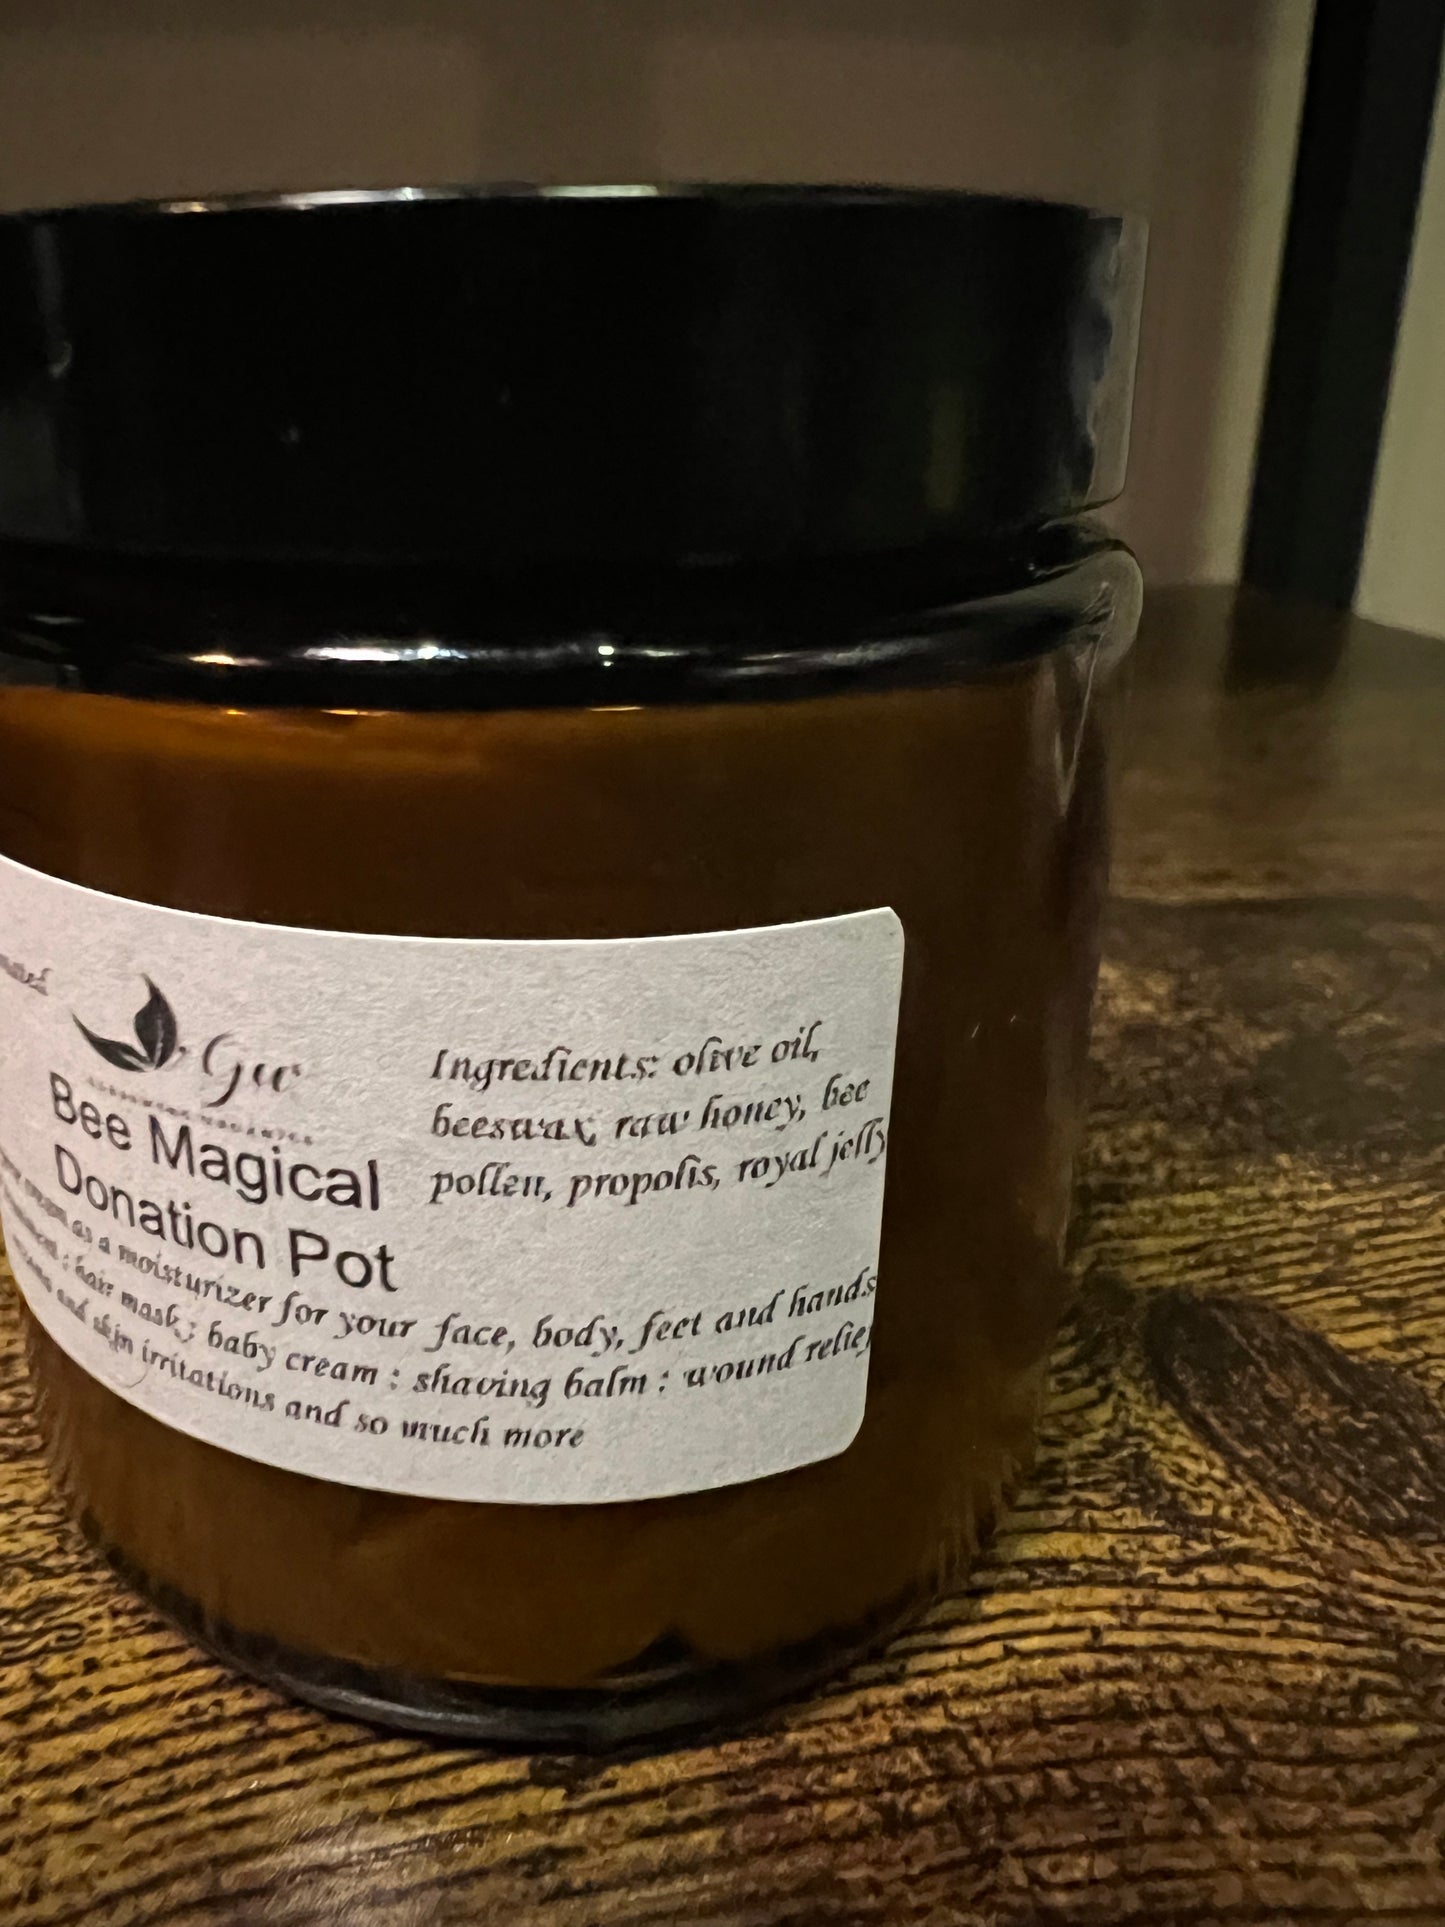 Bee Magical | Donation Pot